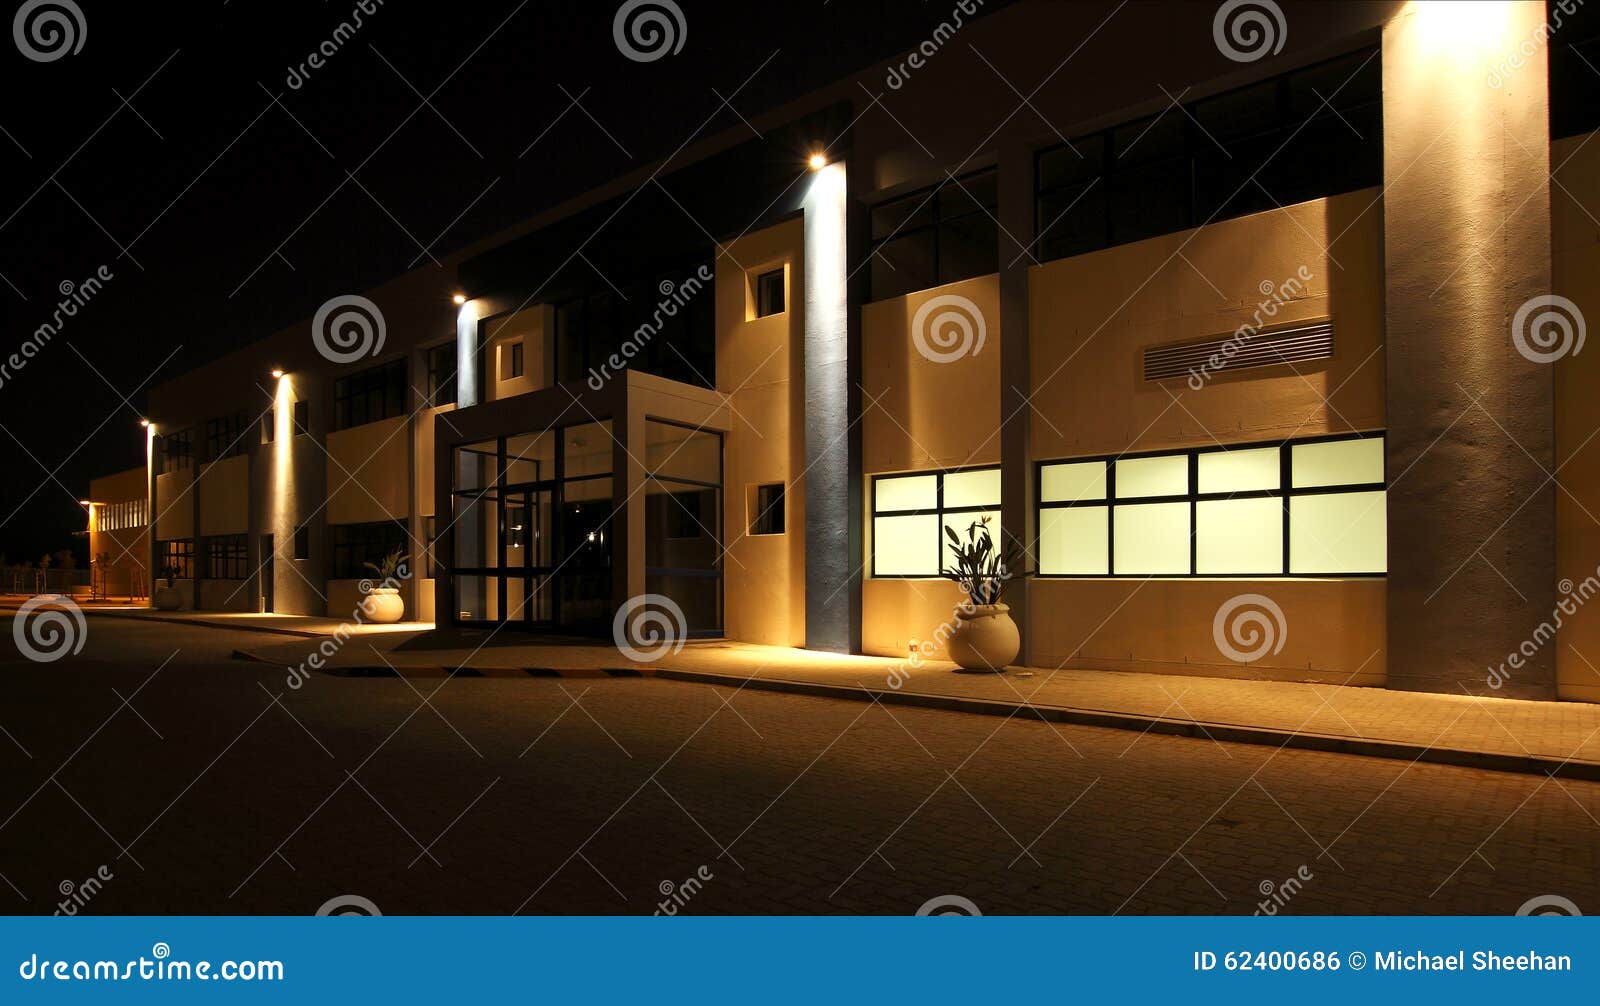 warehouse outside night